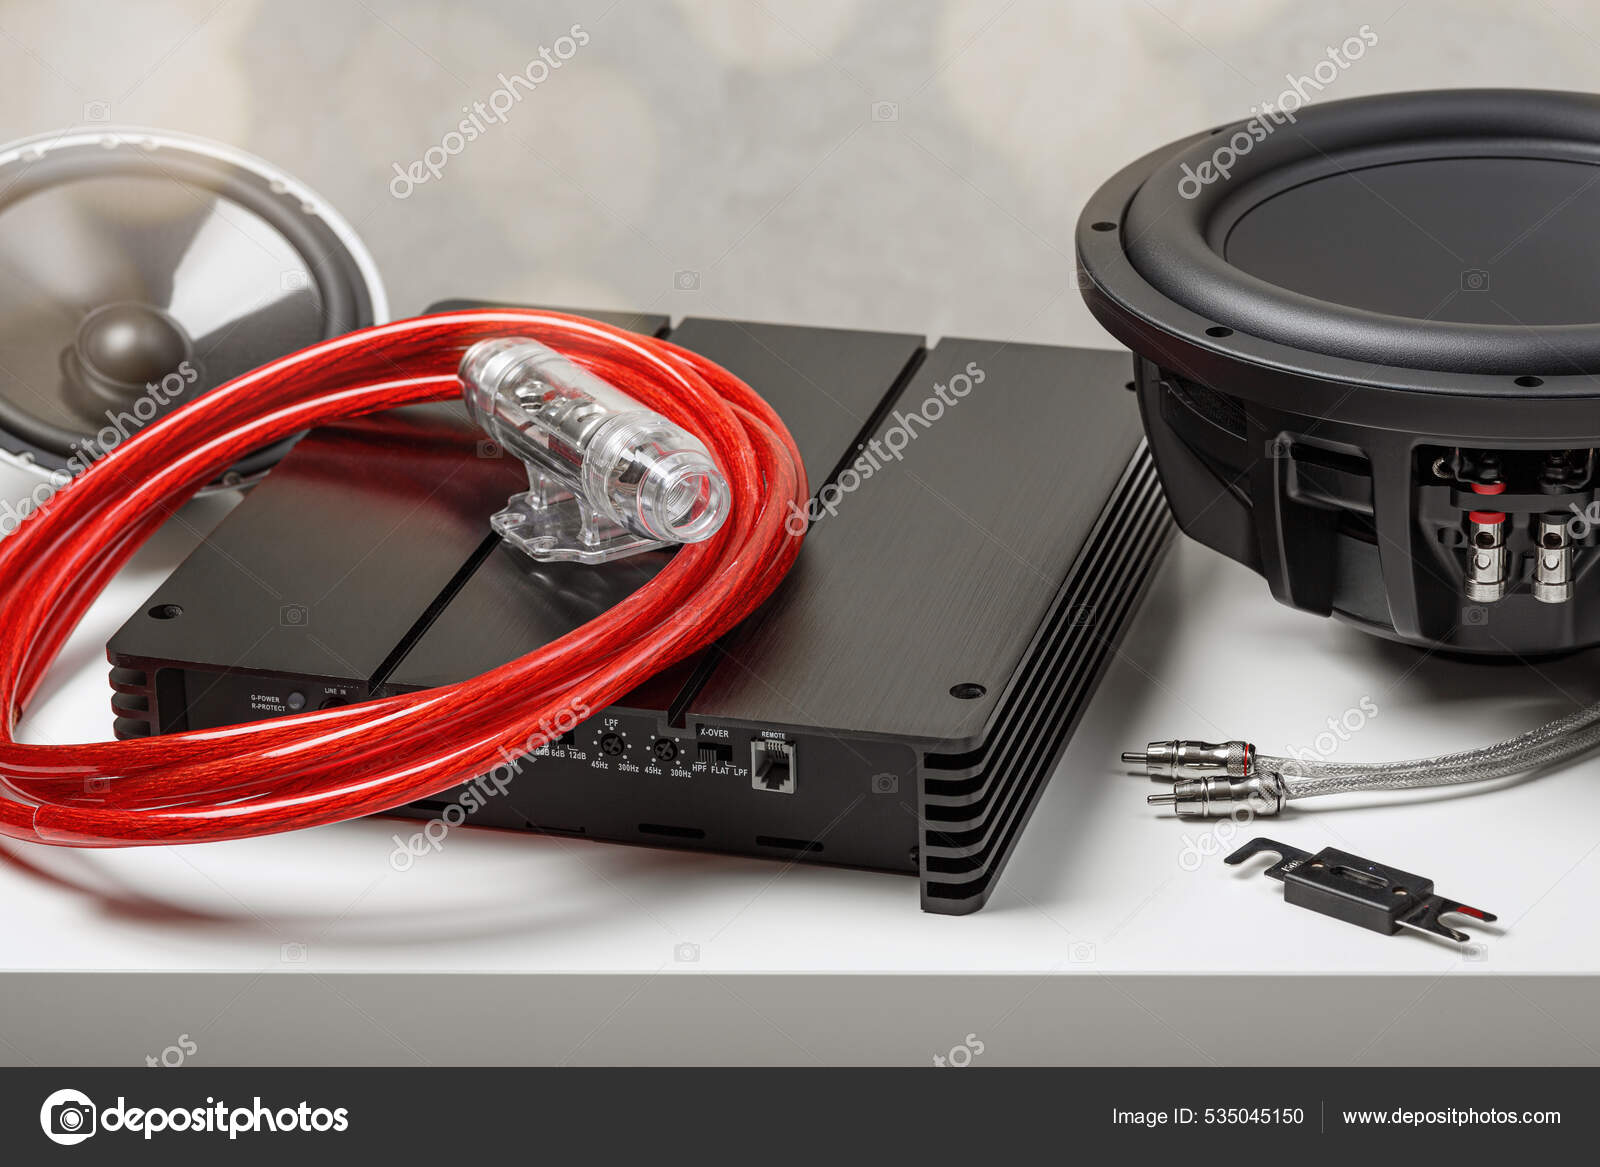 https://st.depositphotos.com/18001804/53504/i/1600/depositphotos_535045150-stock-photo-car-audio-car-speakers-subwoofer.jpg